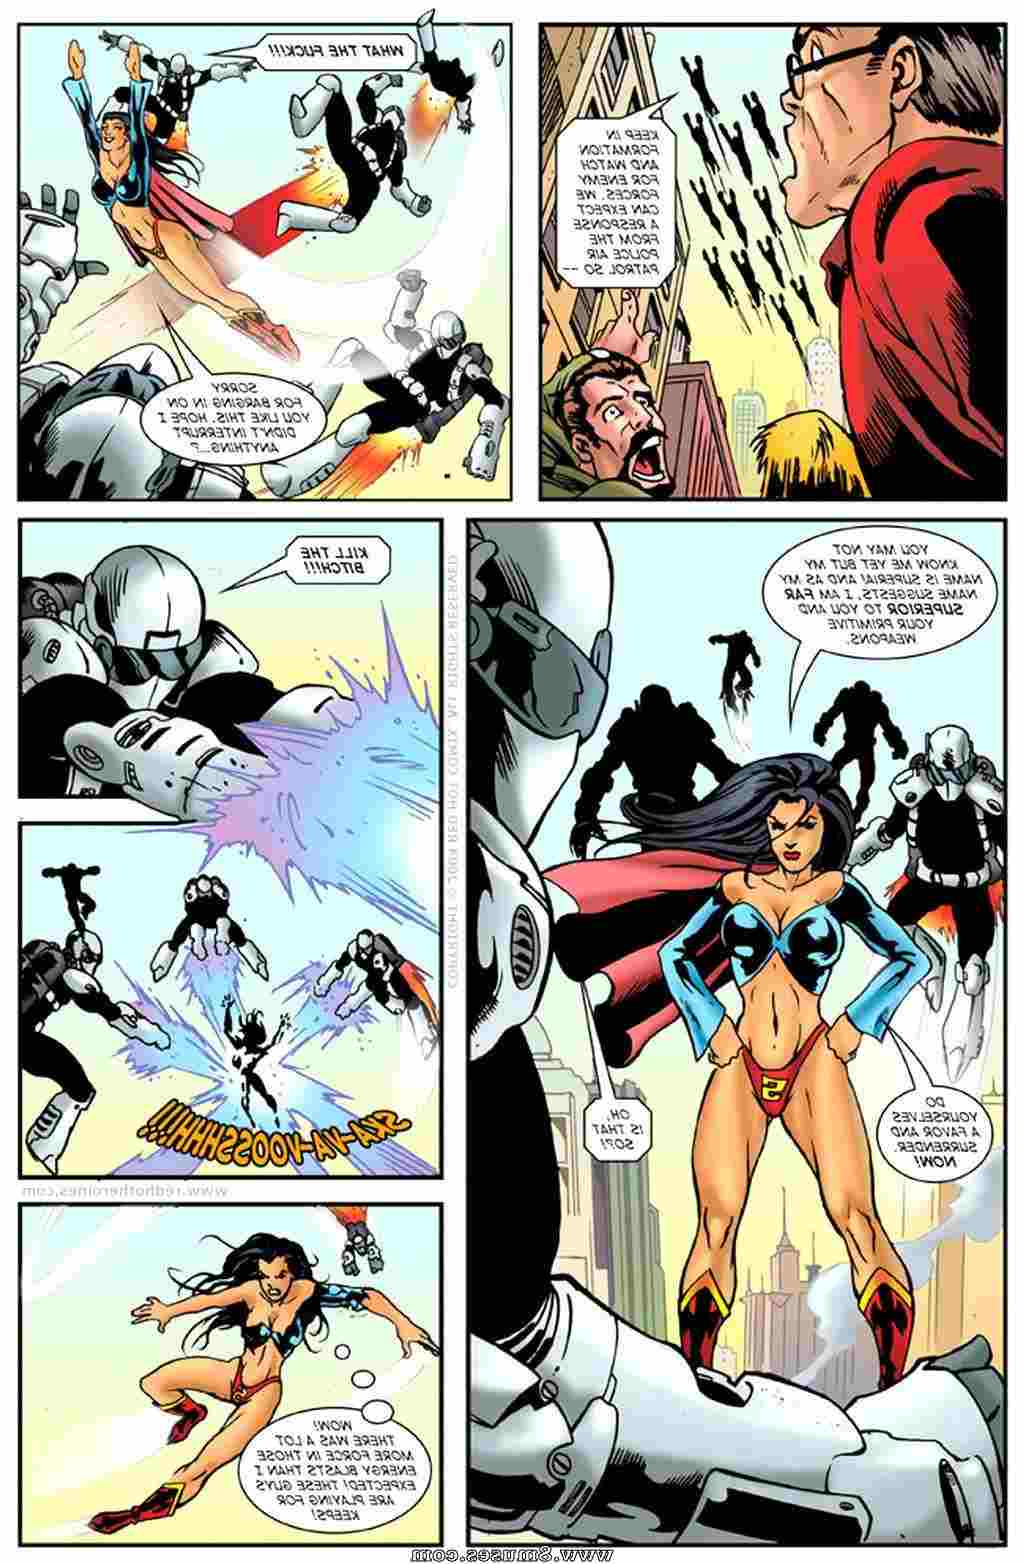 Red-Hot-Heroines-Comics/Superia Superia__8muses_-_Sex_and_Porn_Comics_4.jpg